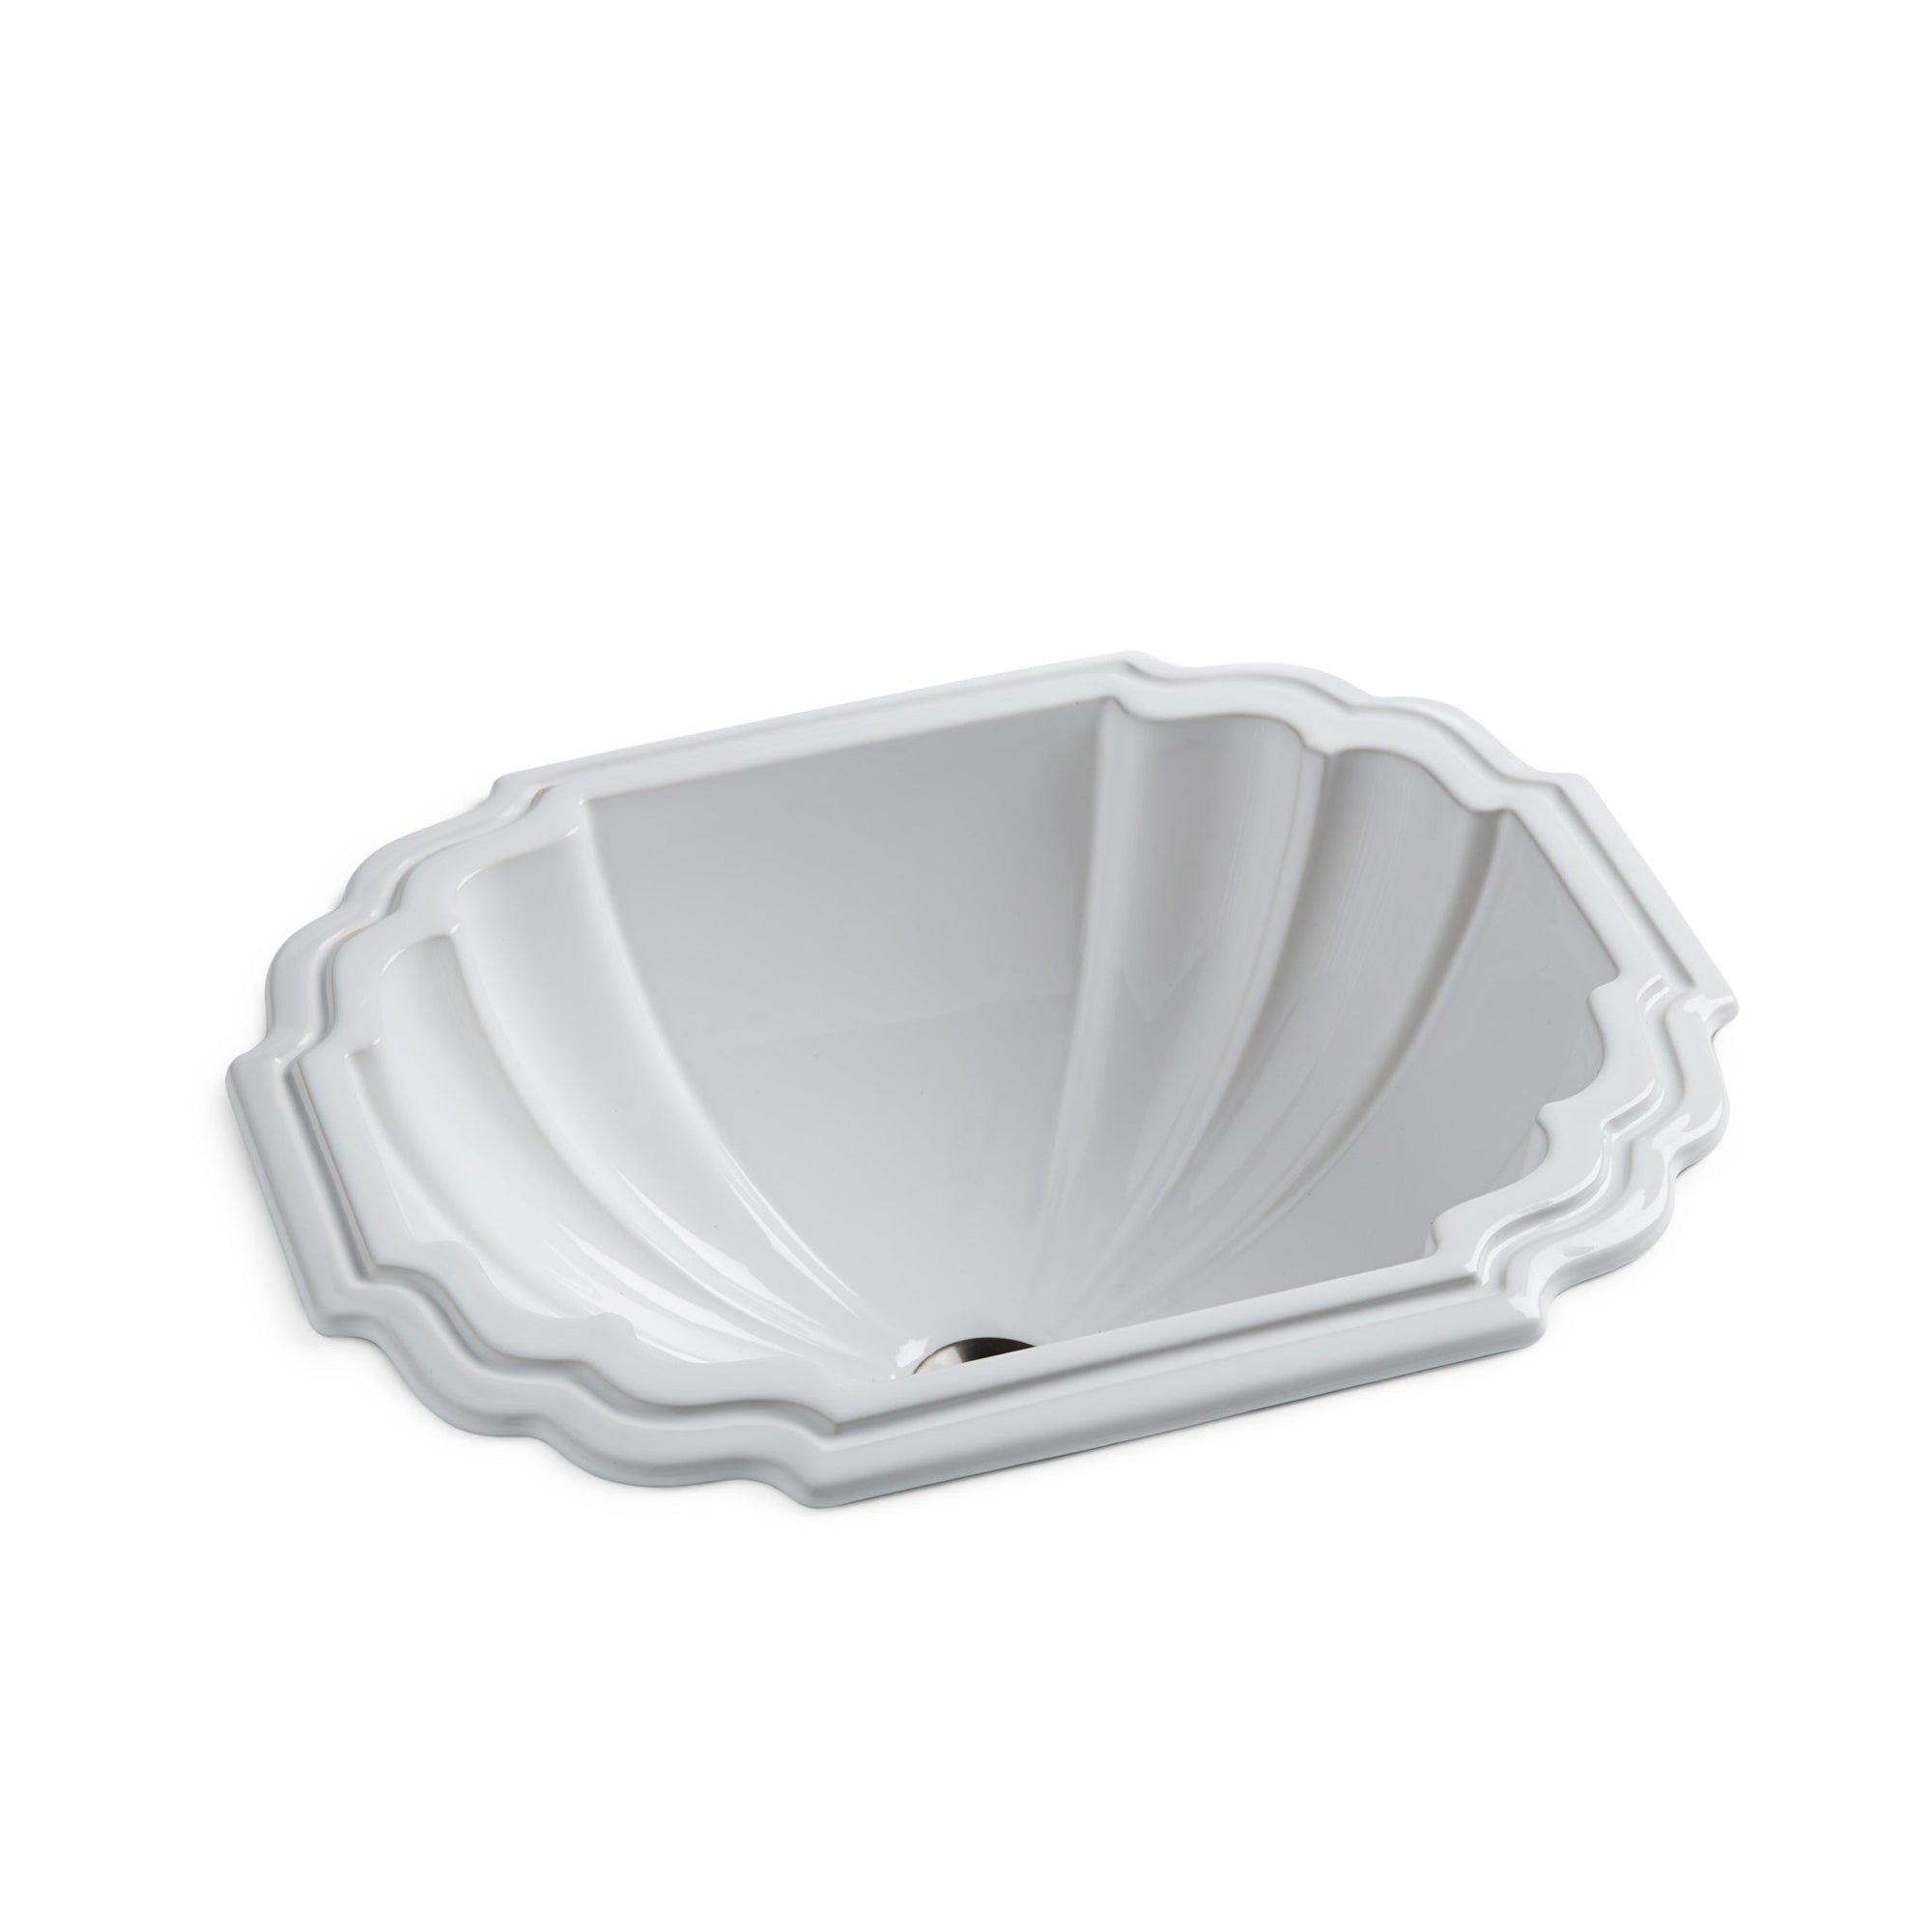 OE5-WHT Sherle Wagner International White Glazed Georgian Ceramic Over Edge Sink